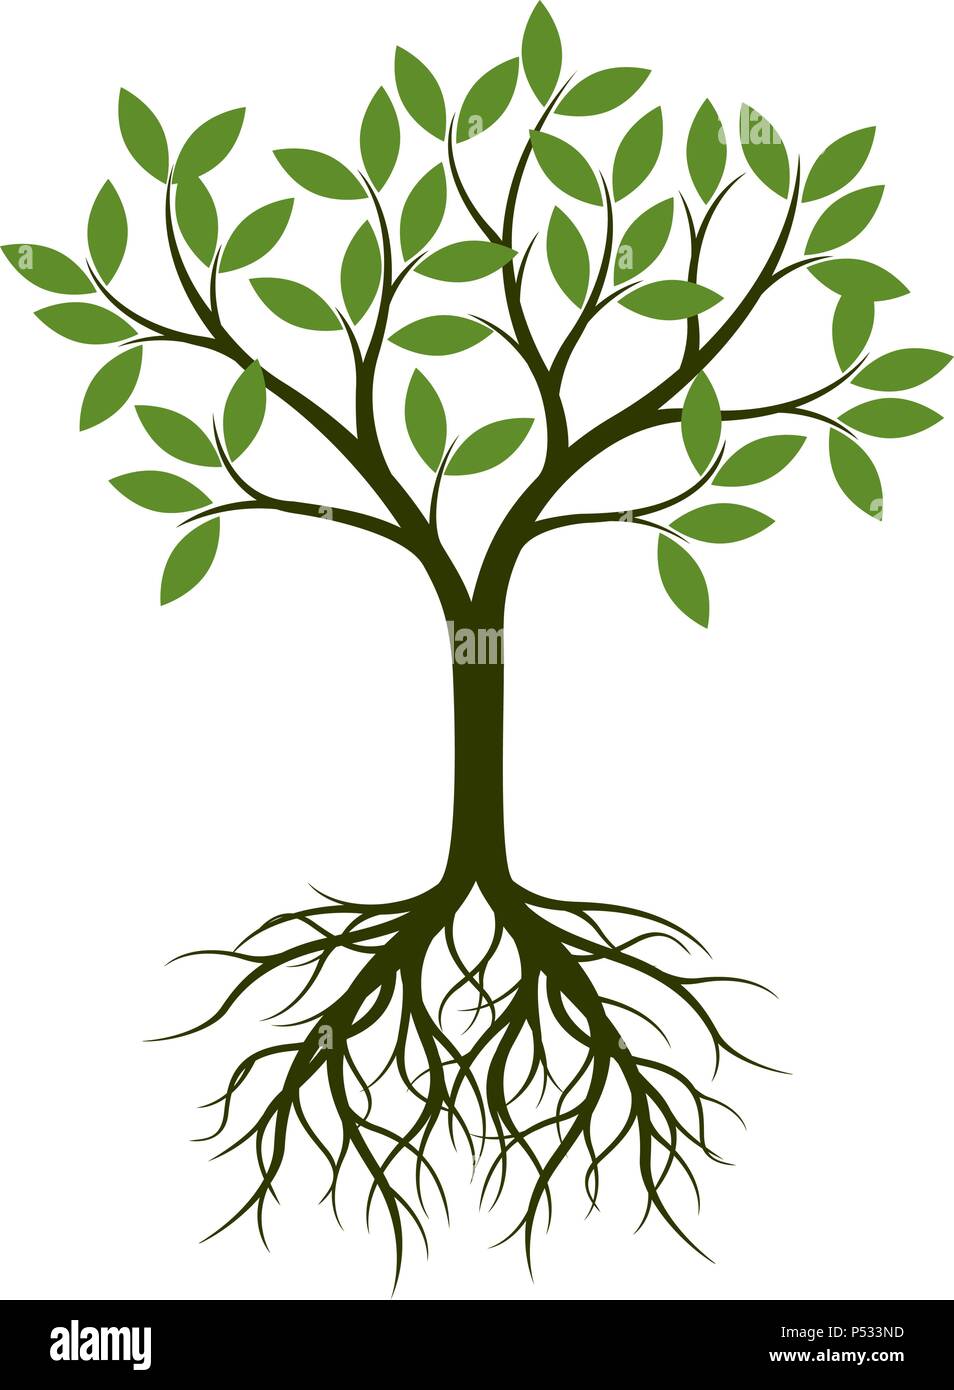 Gruner Baum Mit Wurzel Vector Illustration Stock Vektorgrafik Alamy